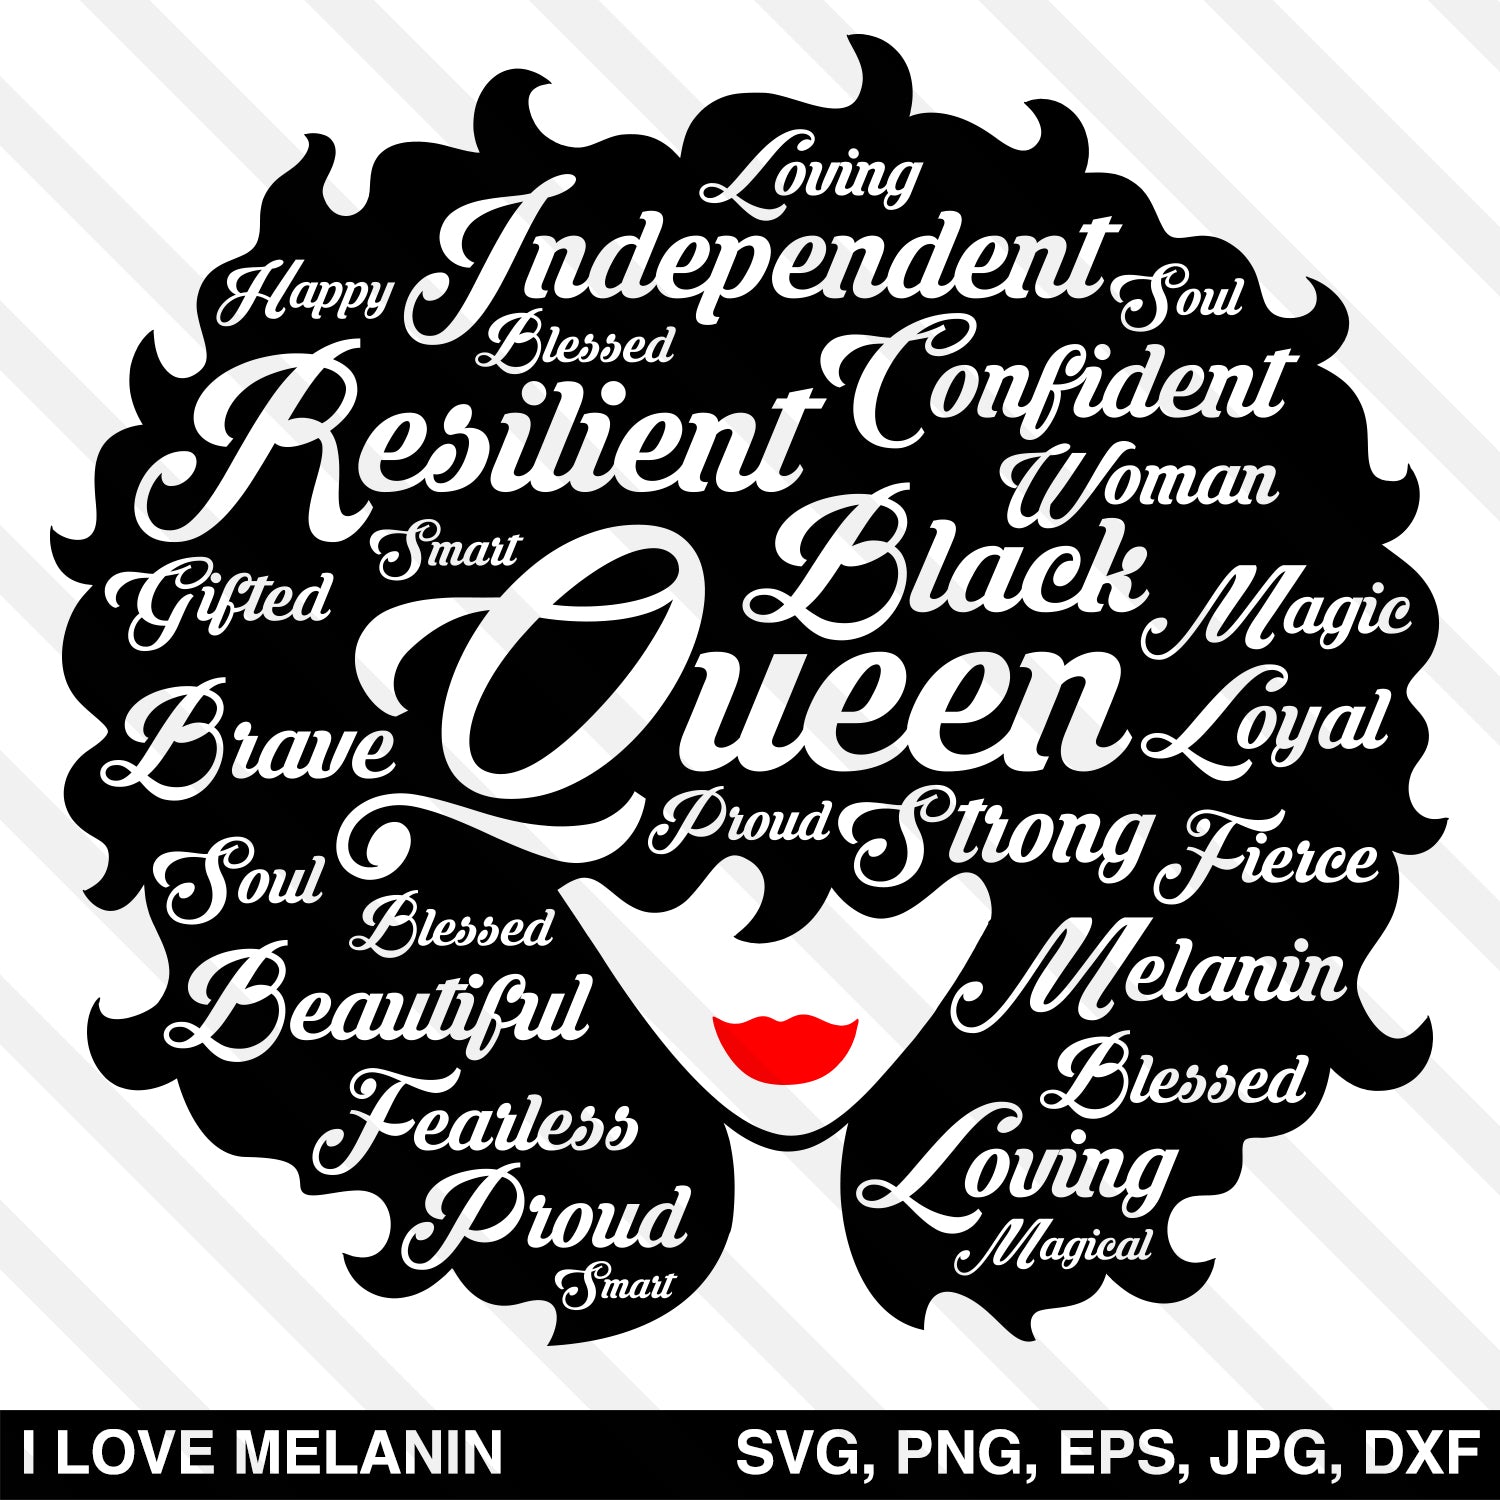 Download Black Queen Afro Woman Svg I Love Melanin